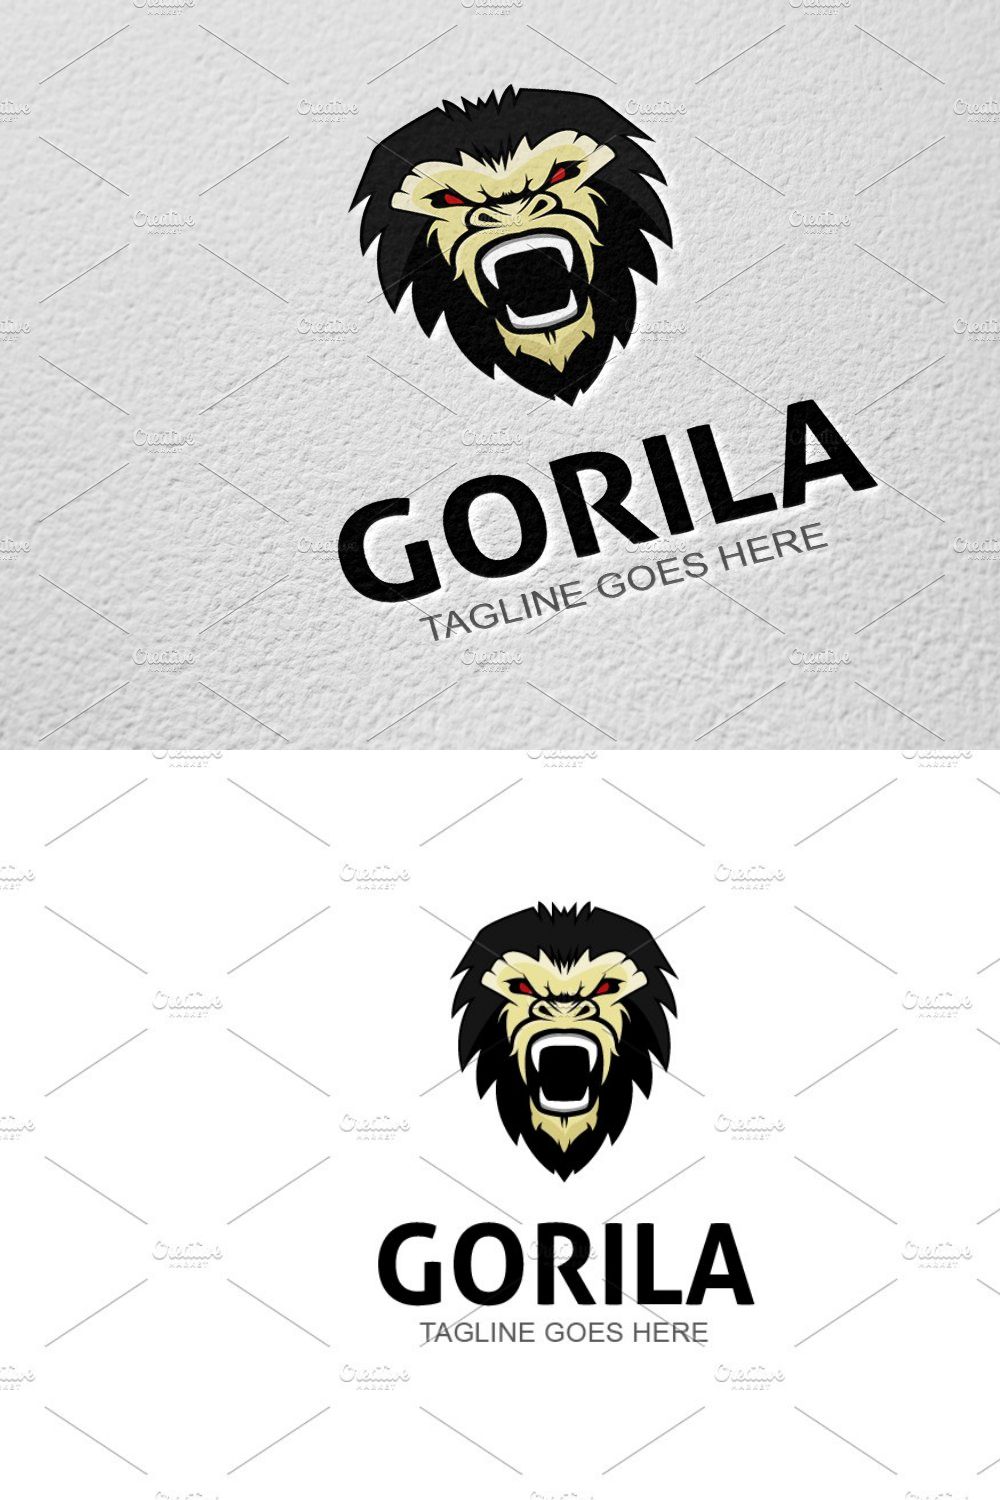 Gorilla Head pinterest preview image.